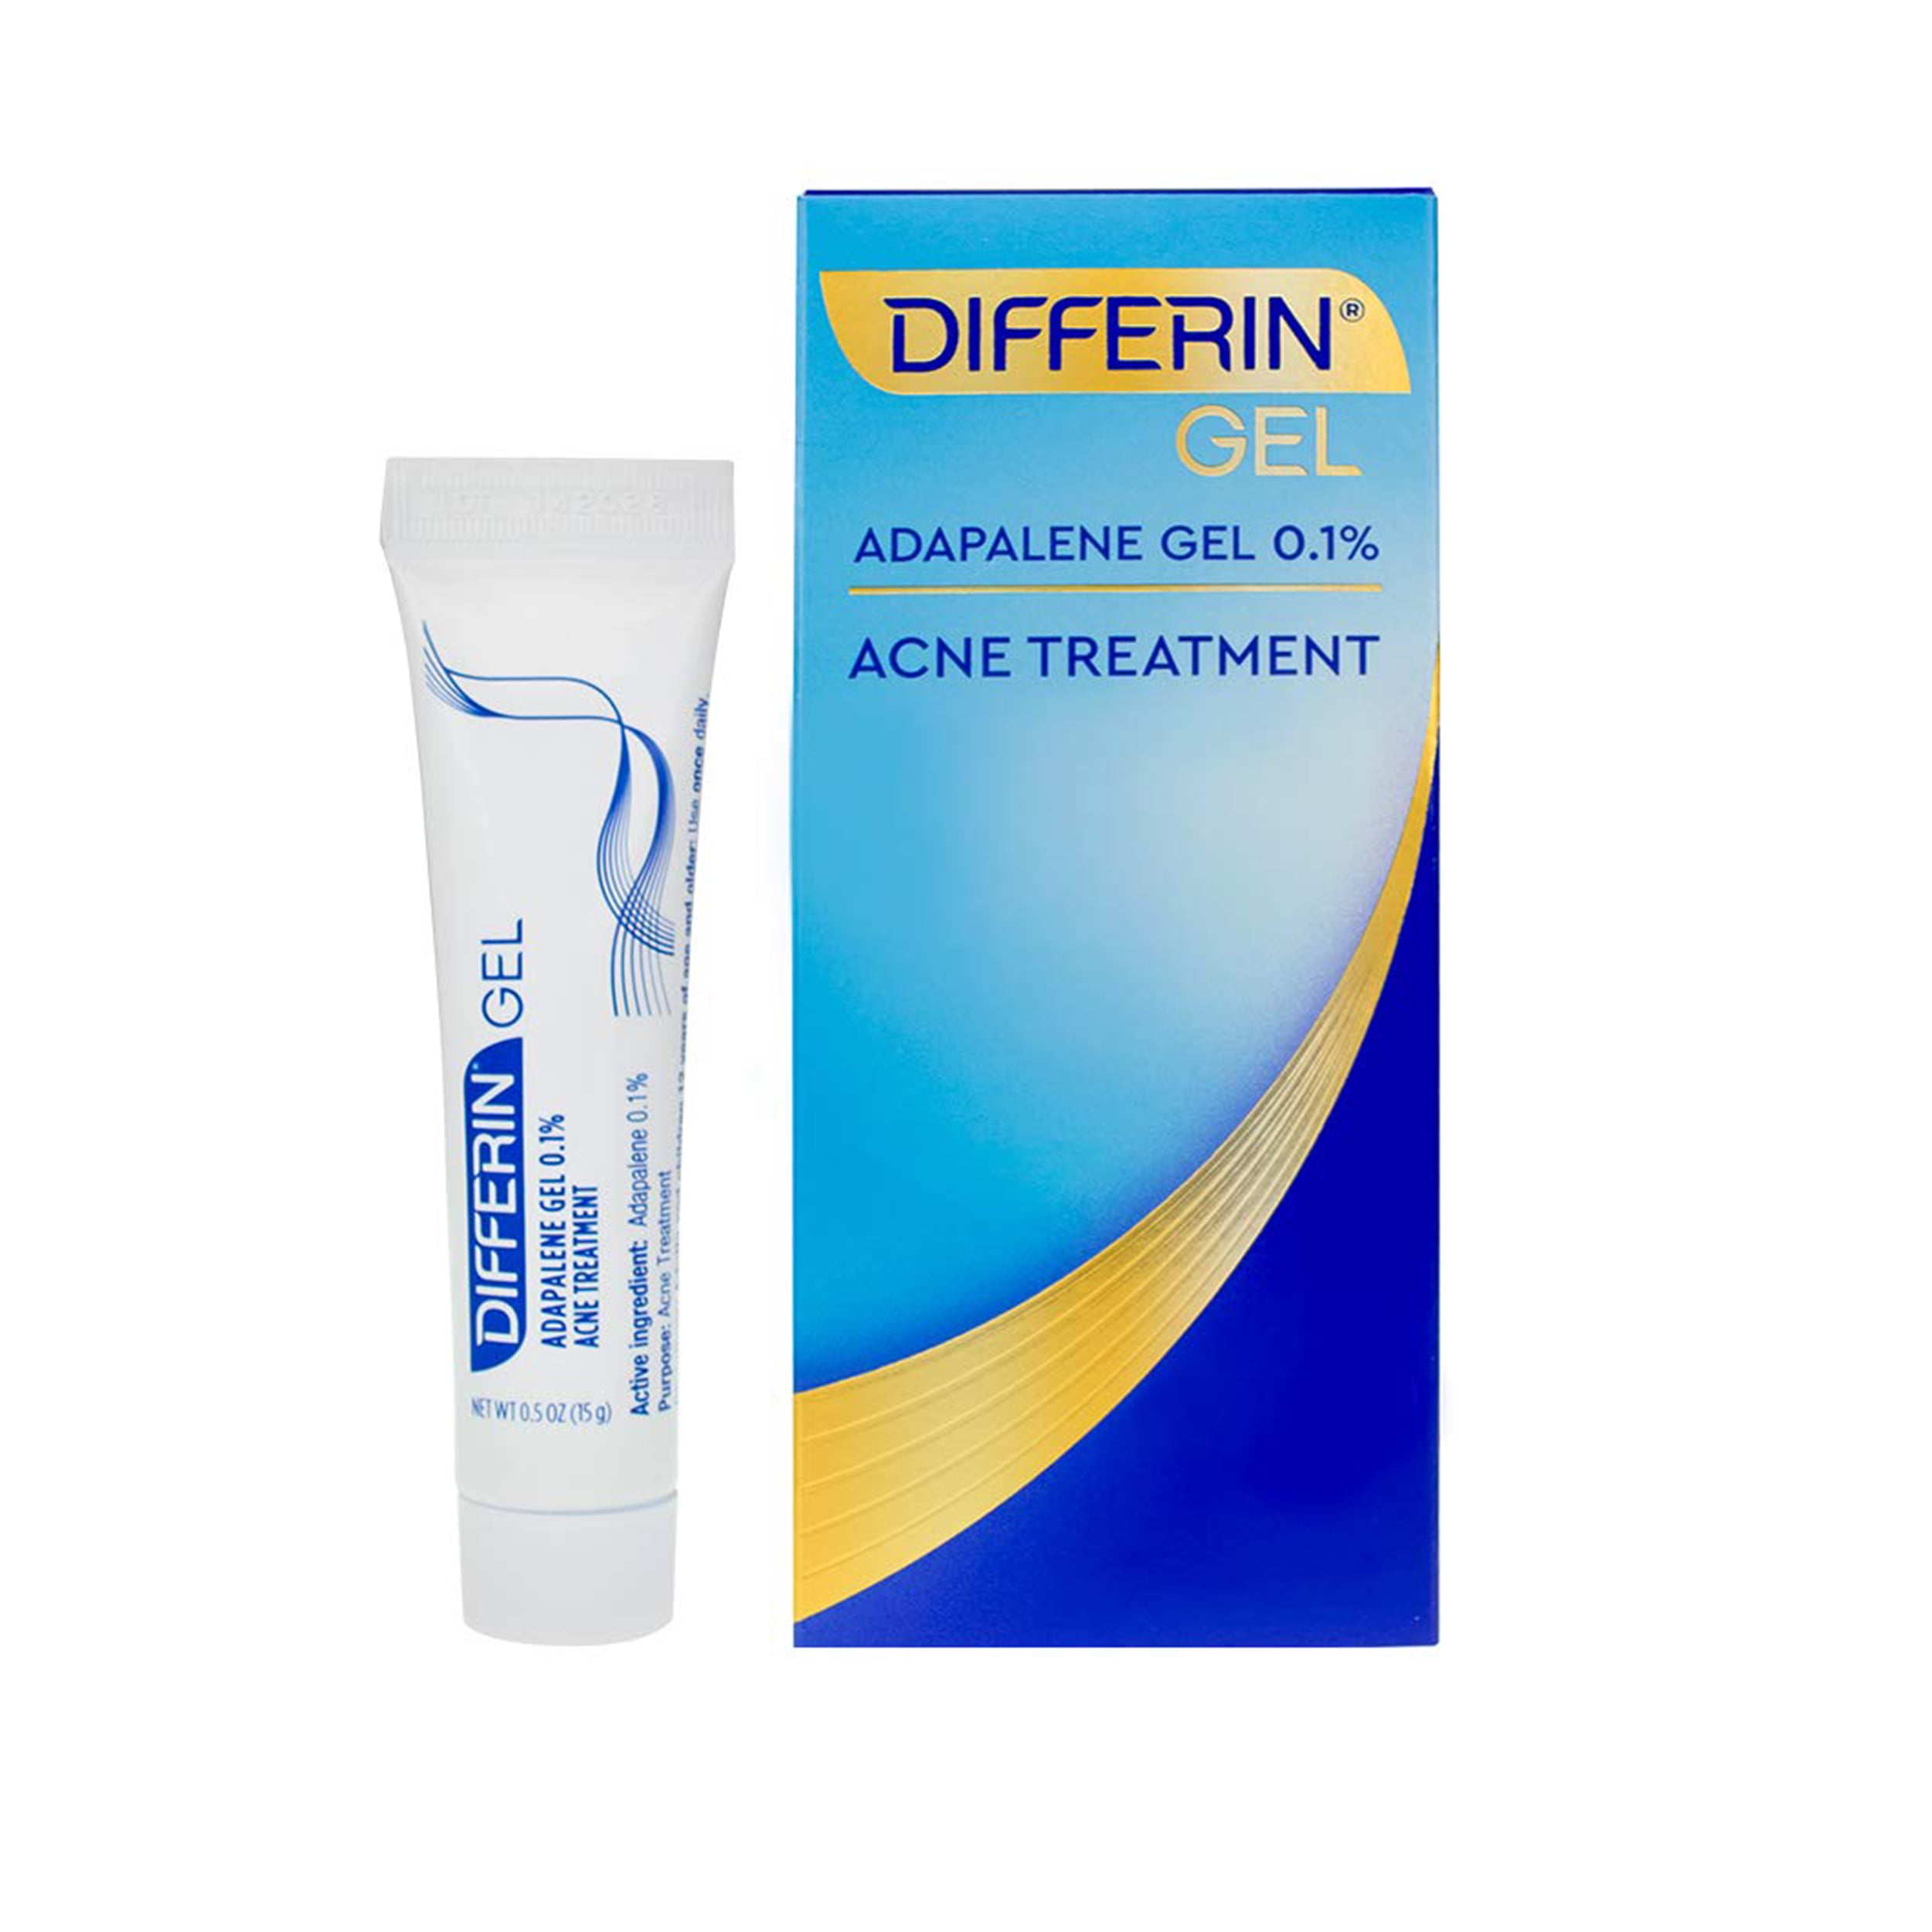 Differin with Adapalene Gel Acne Treatment 0.5 oz